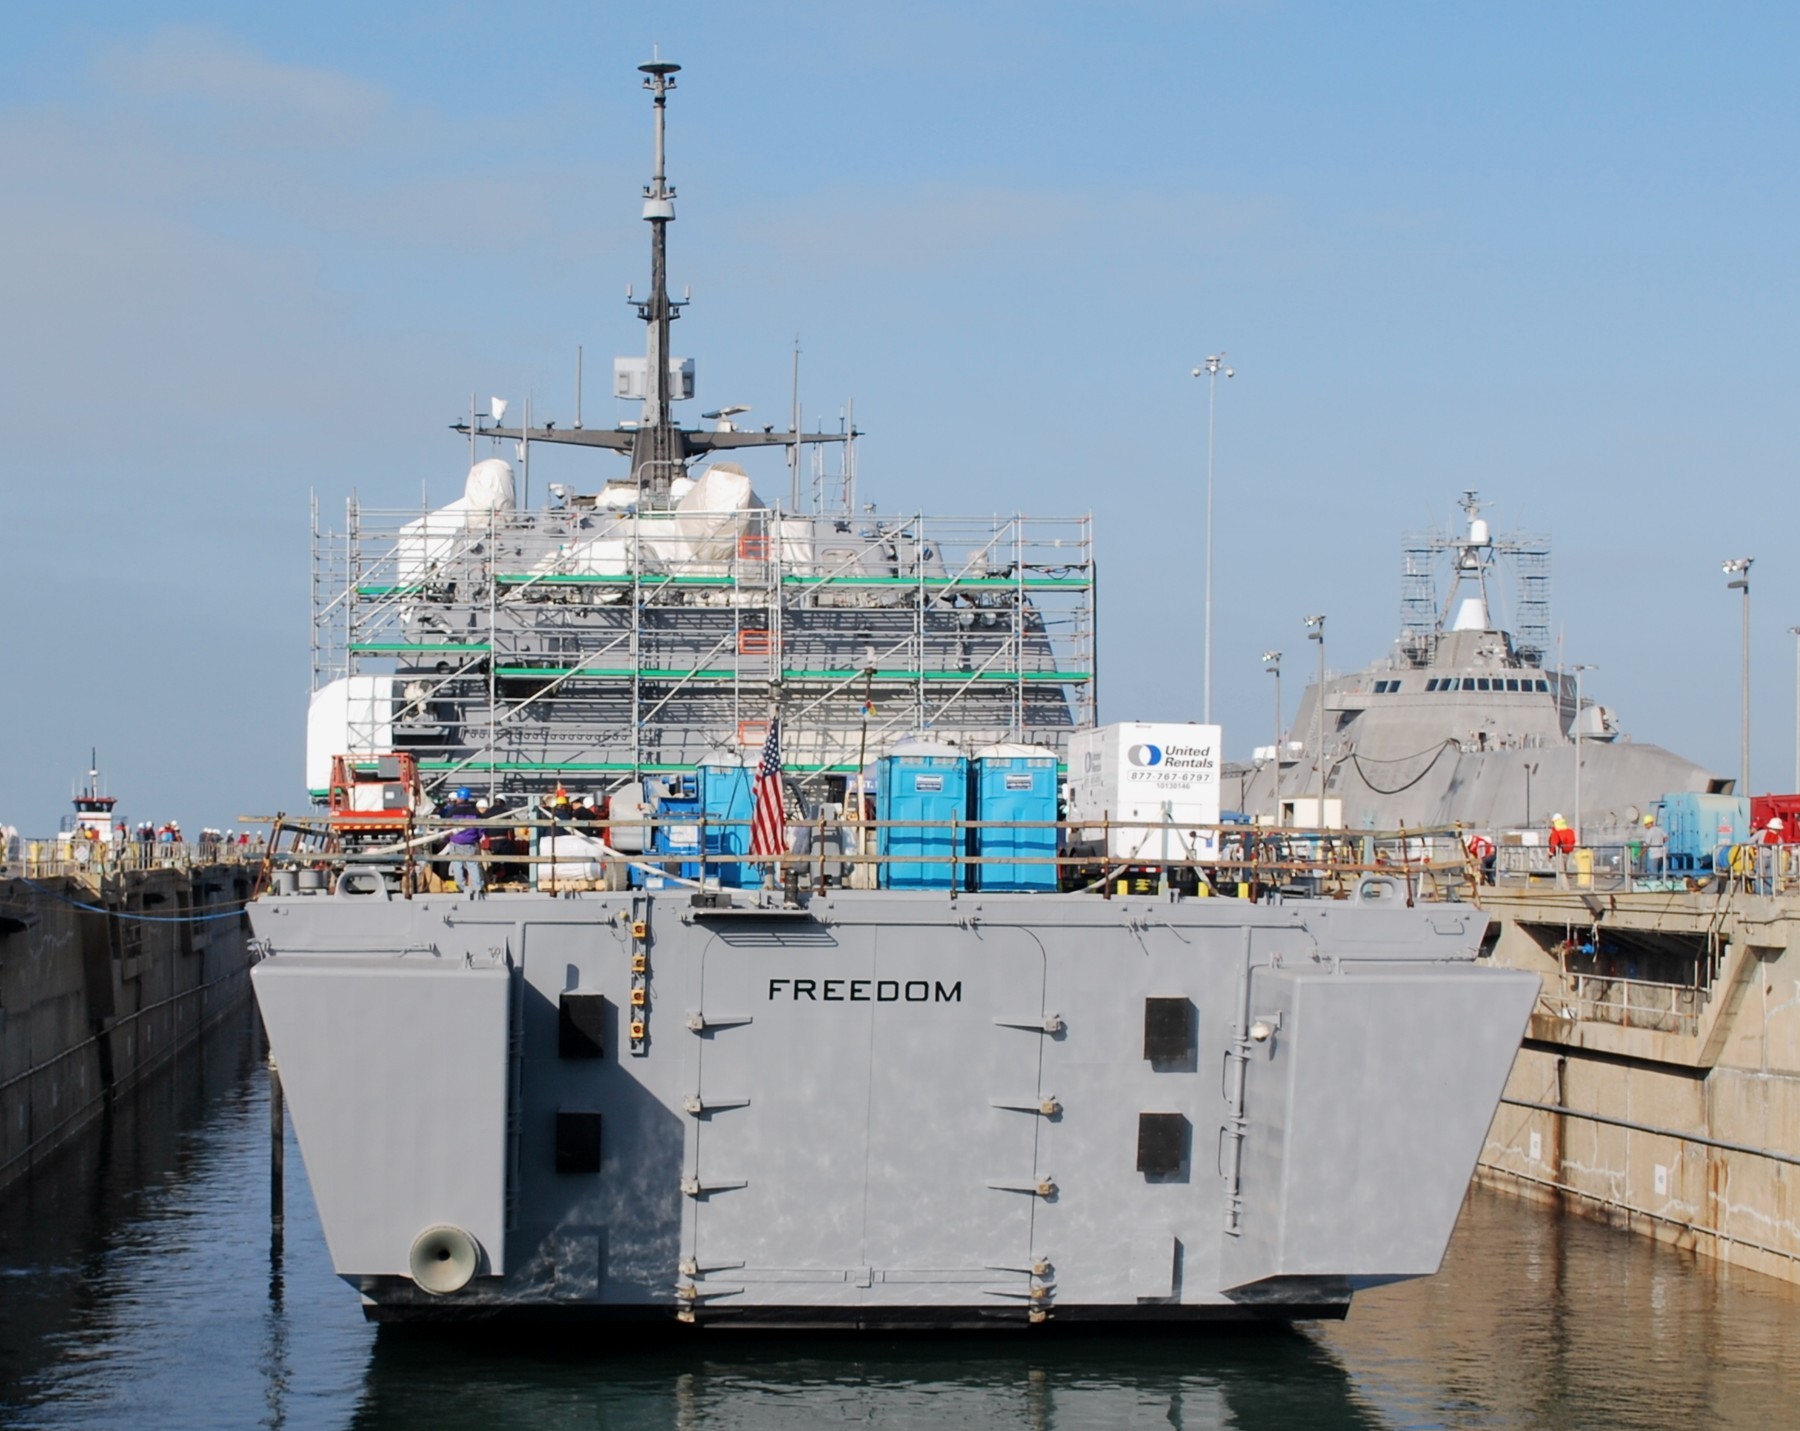 lcs-1 uss freedom class littoral combat ship us navy 173 dry dock san diego california